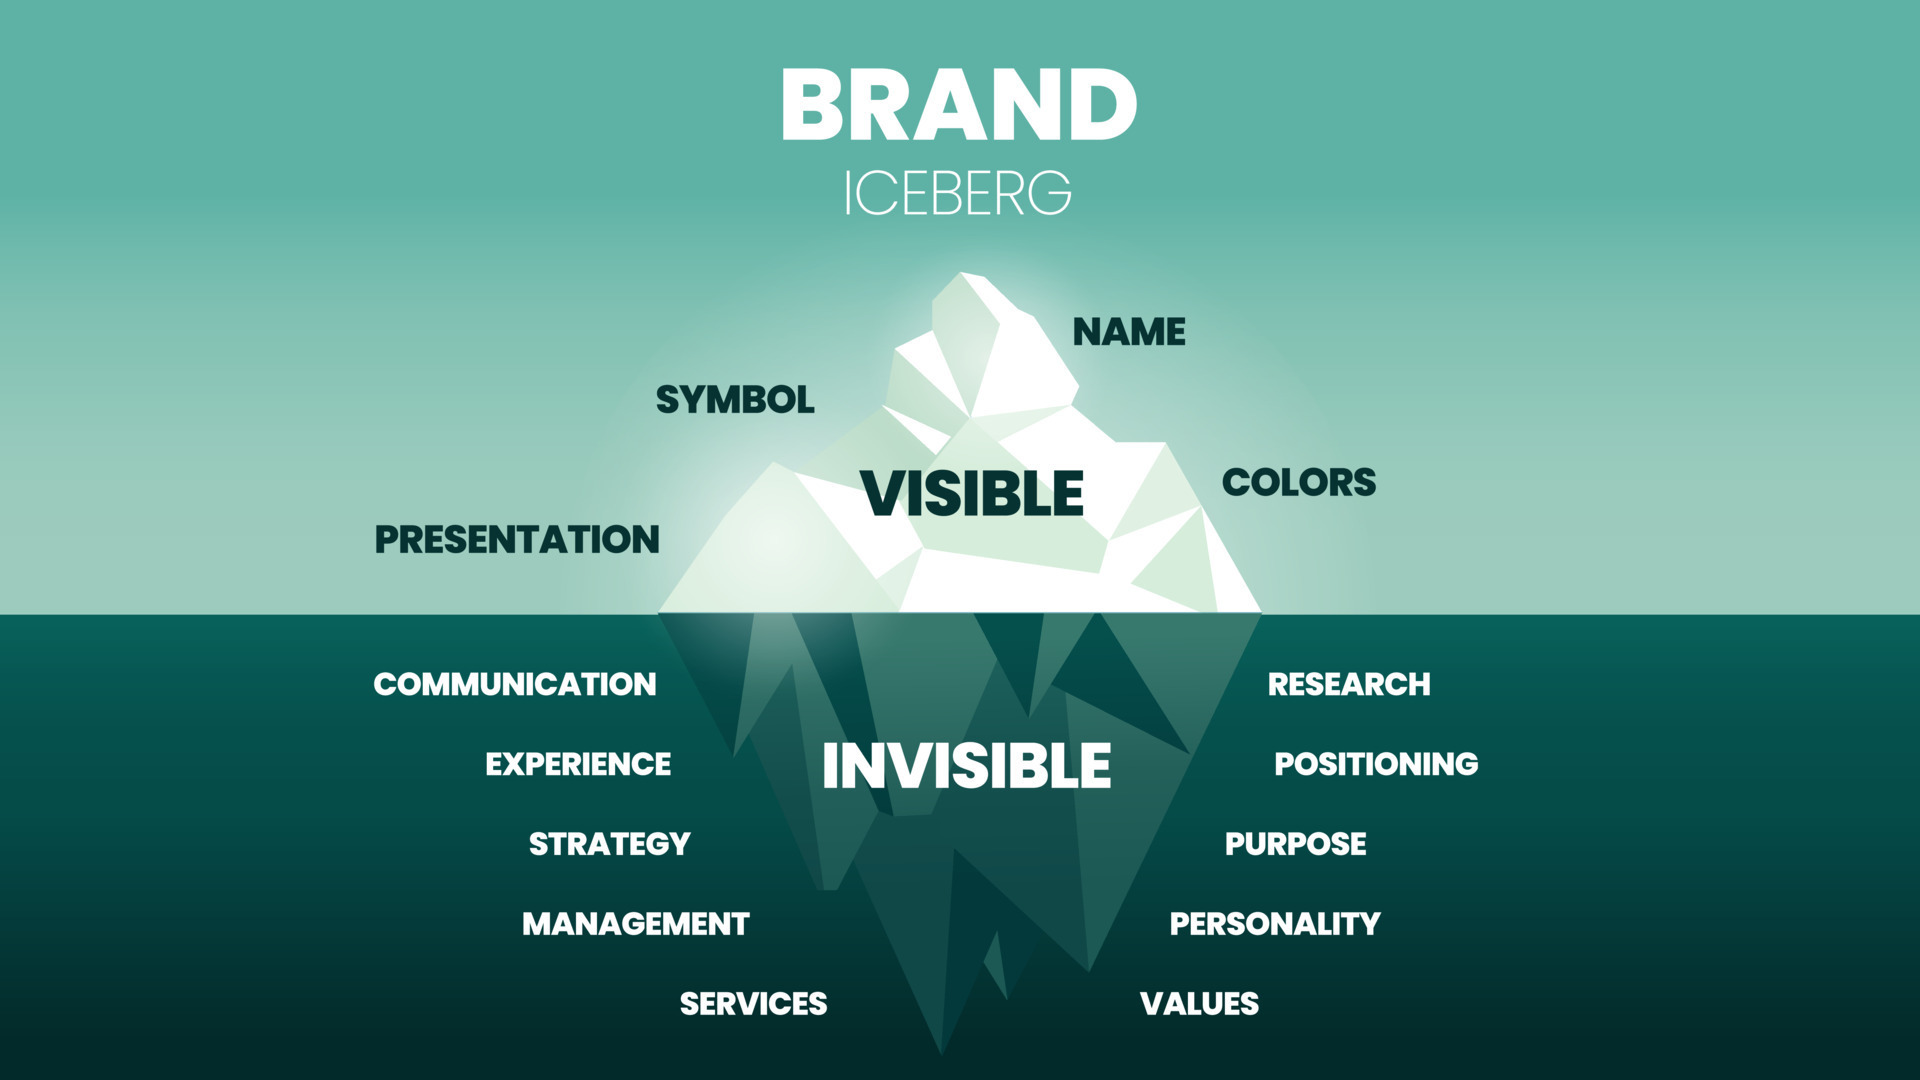 Brand Iceberg diagram | Gutscreative Blog image | Brand Strategy Consulting